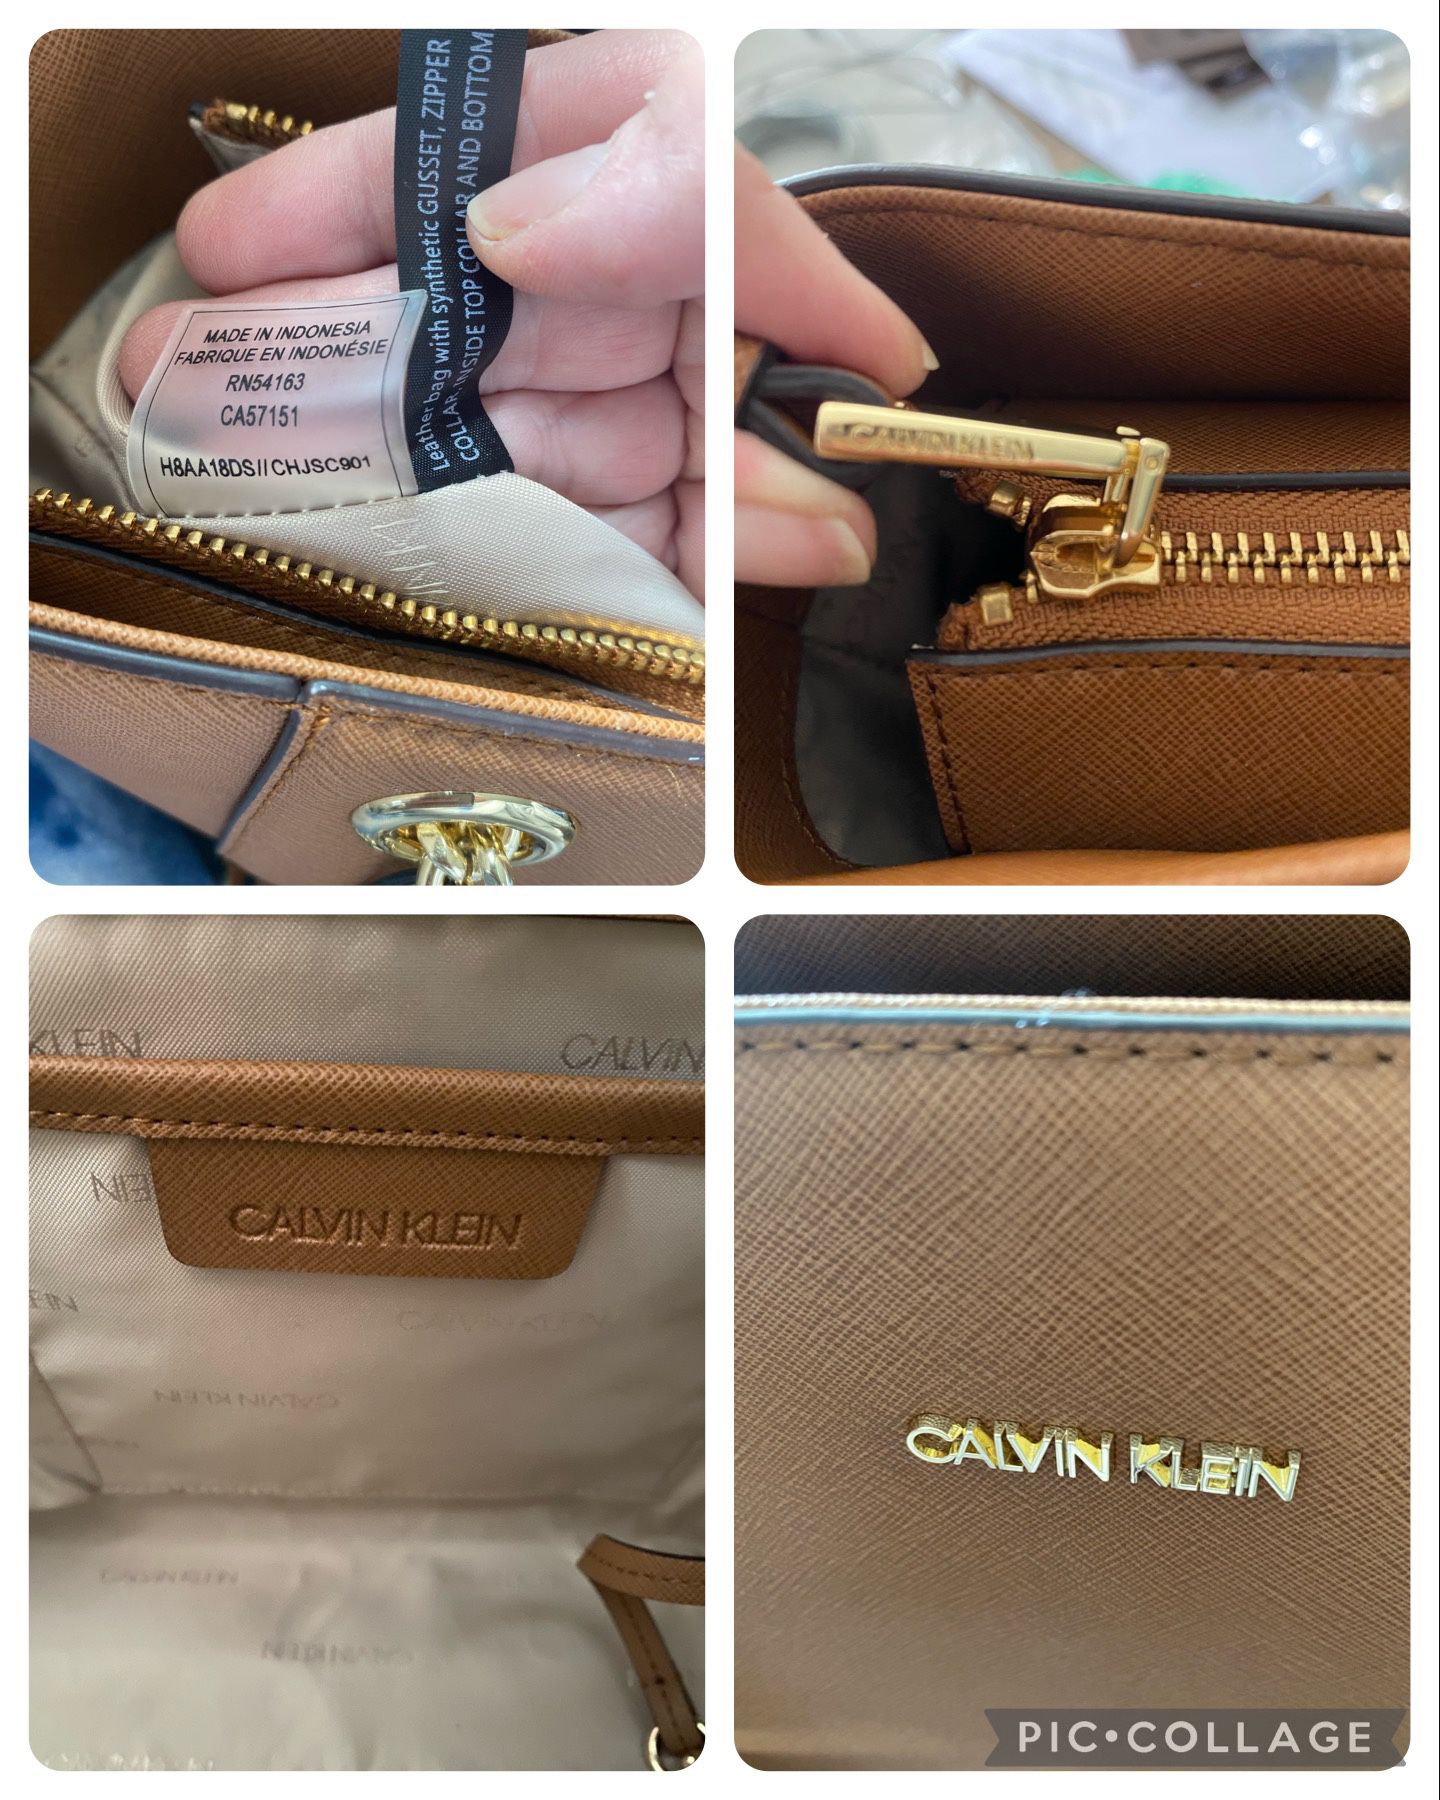 Calvin Klein Hayden Saffiano Leather Tote - Macy's